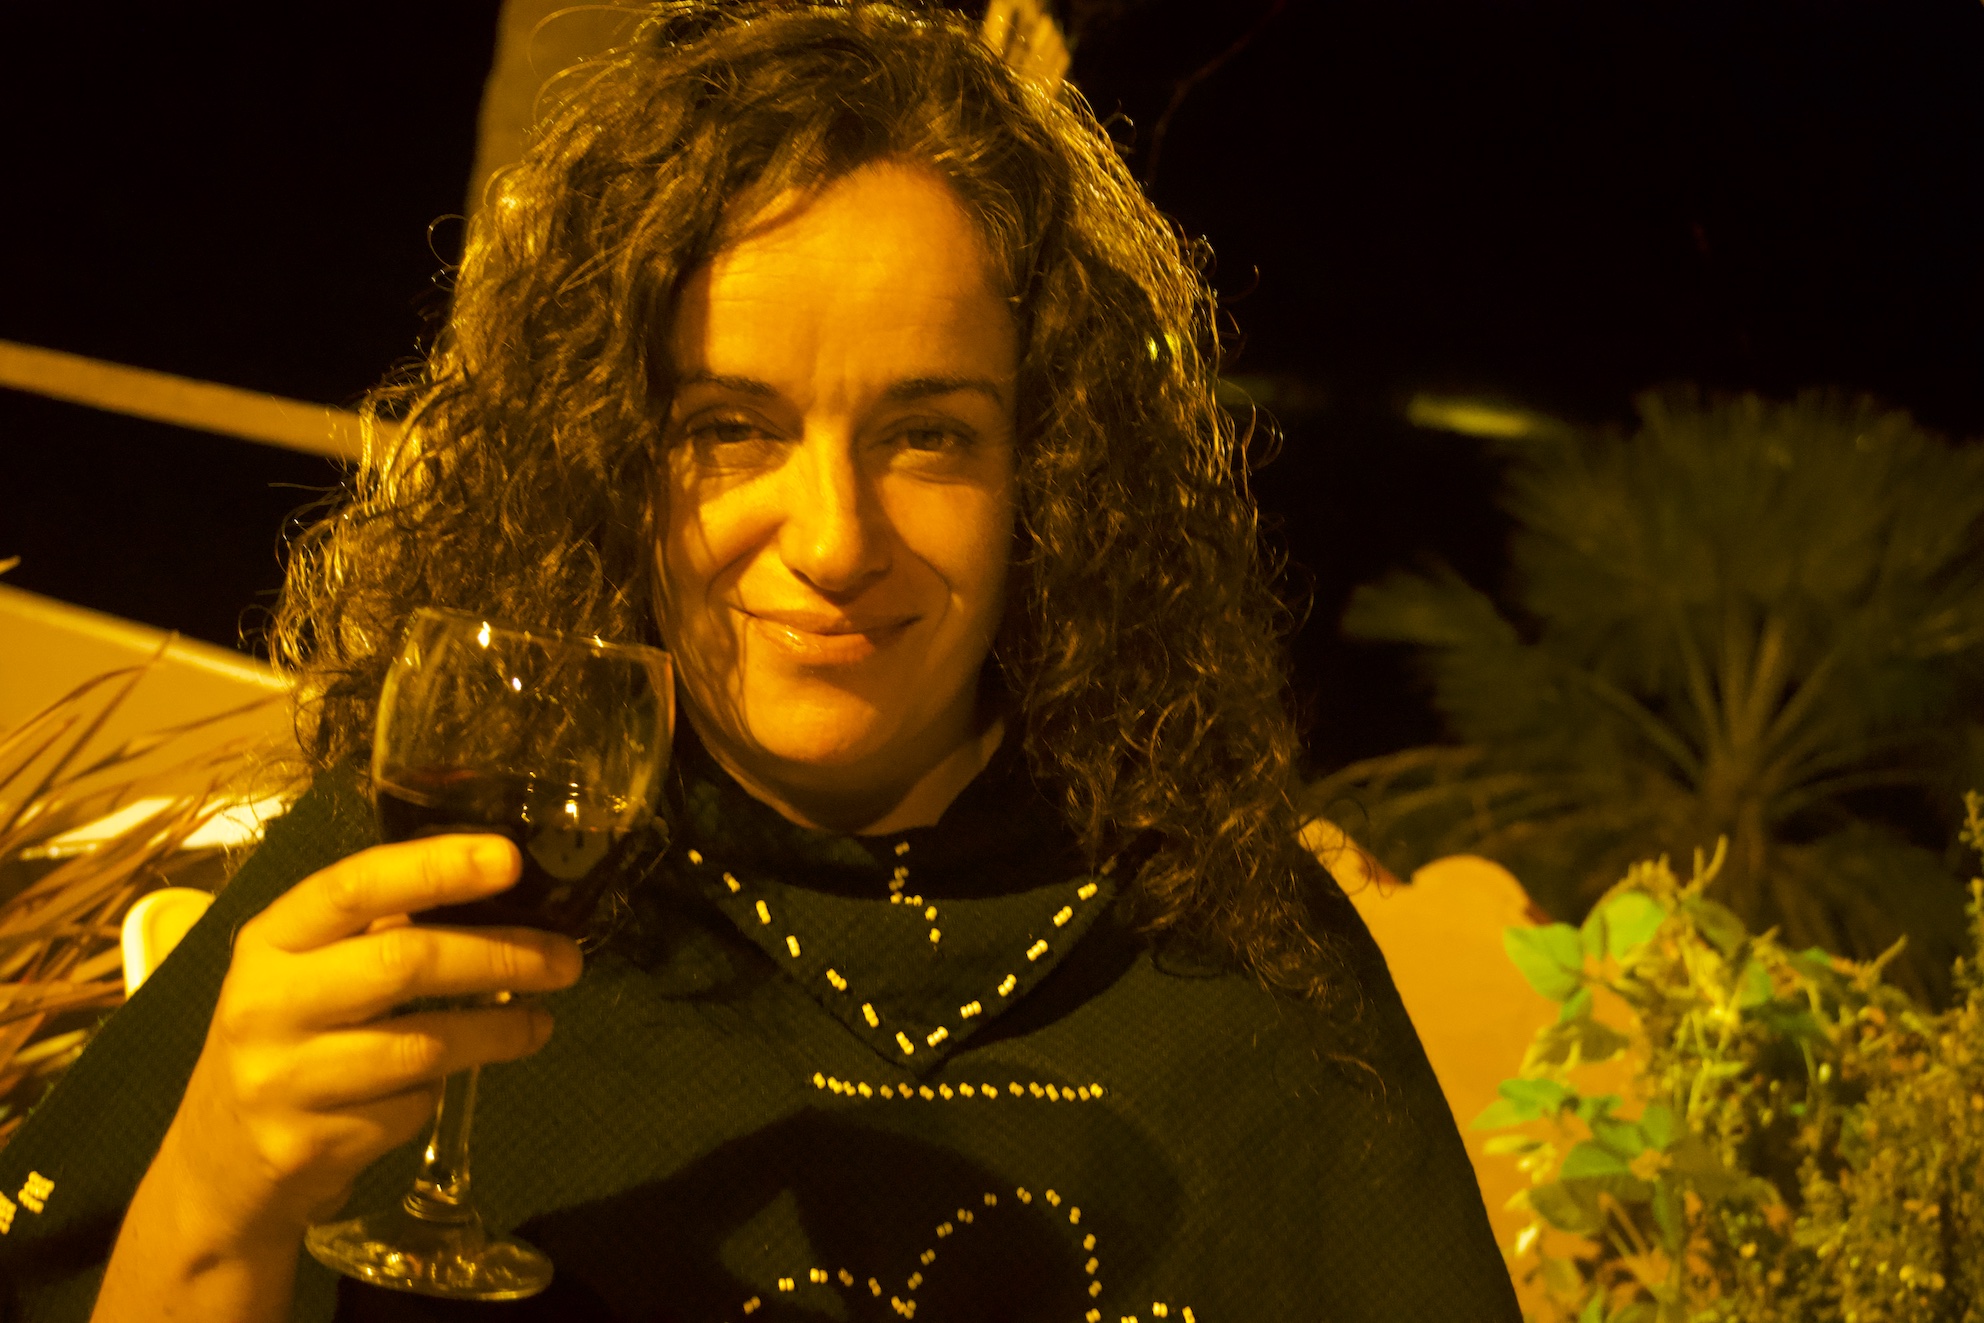 Pilar drinking a glass of wine at La Casa Creativa terrace